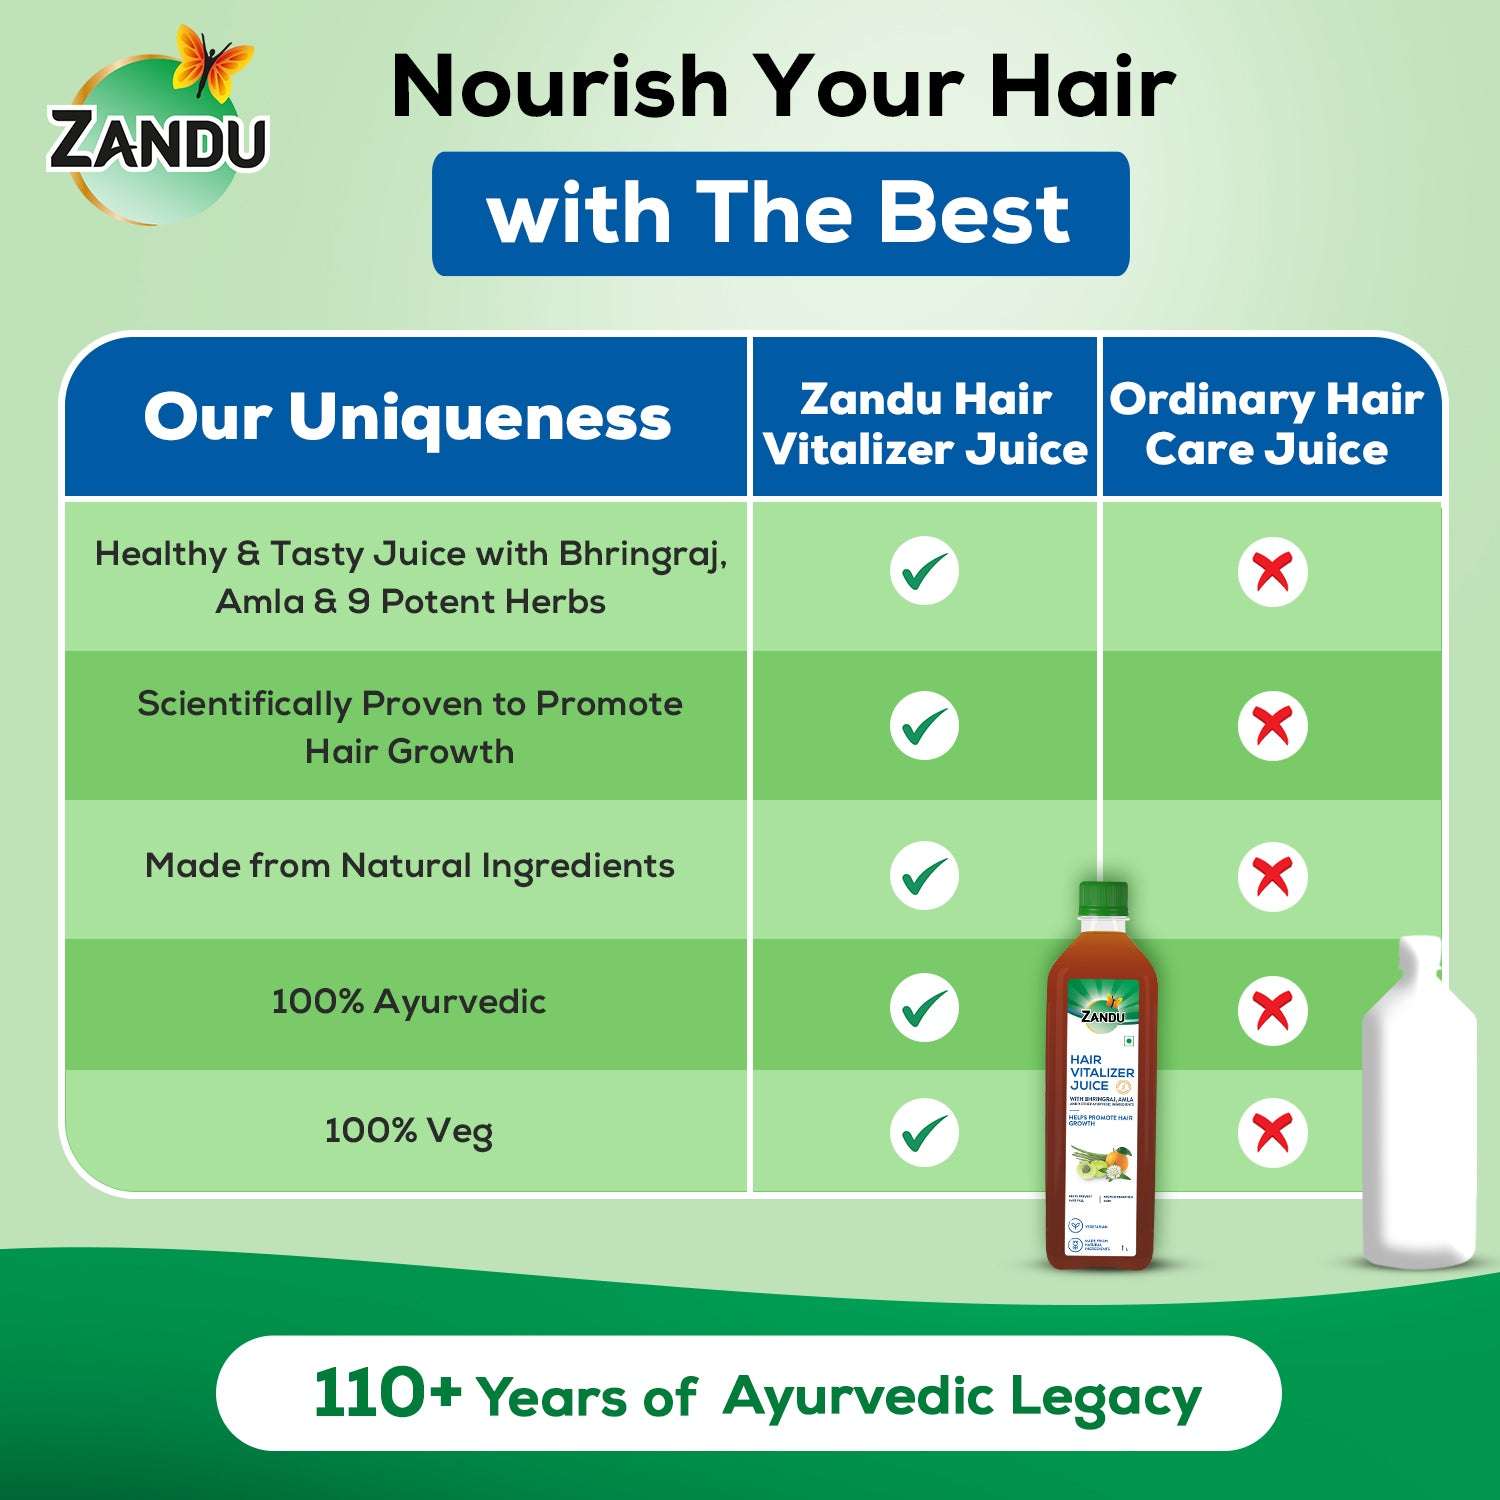 Zandu Hair Vitalizer Juice vs others